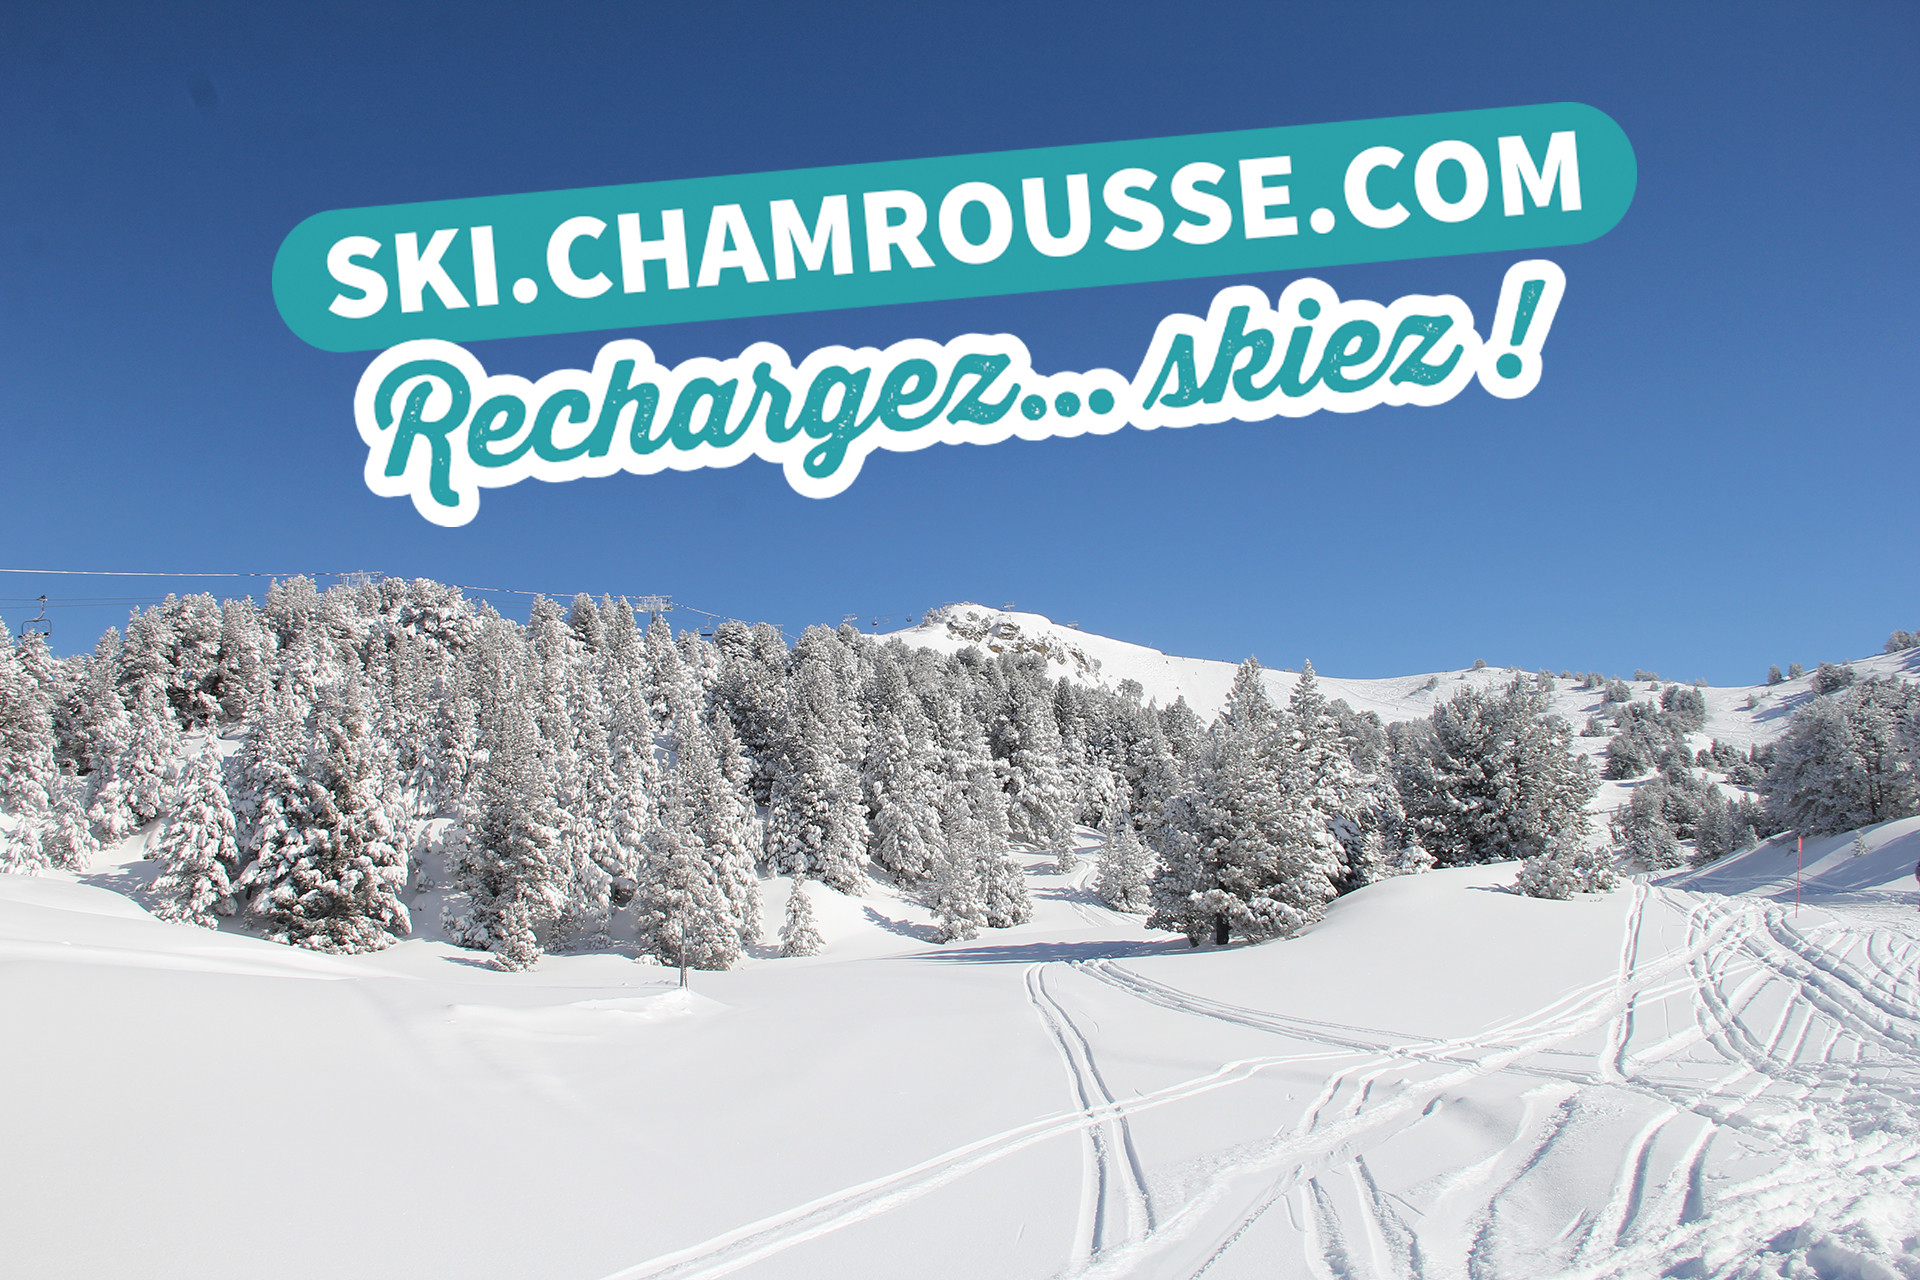 Chamrousse web skipass promotion 10% discount mountain ski resort grenoble lyon isere french alps france